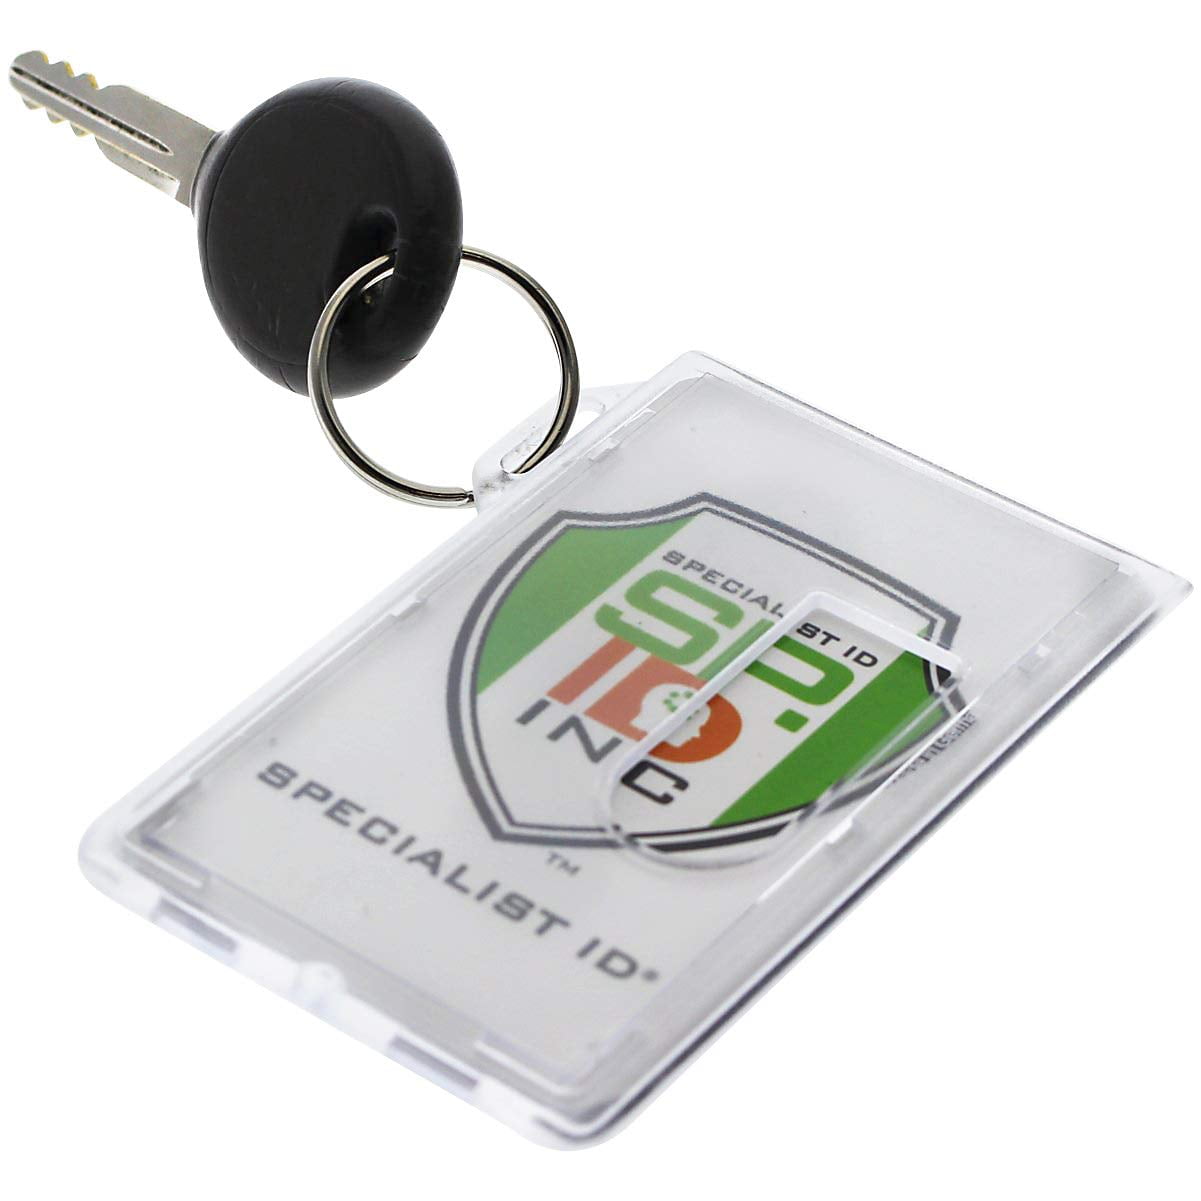 Lanyard Key Chain Badge Holder - Twin Pack Bloc